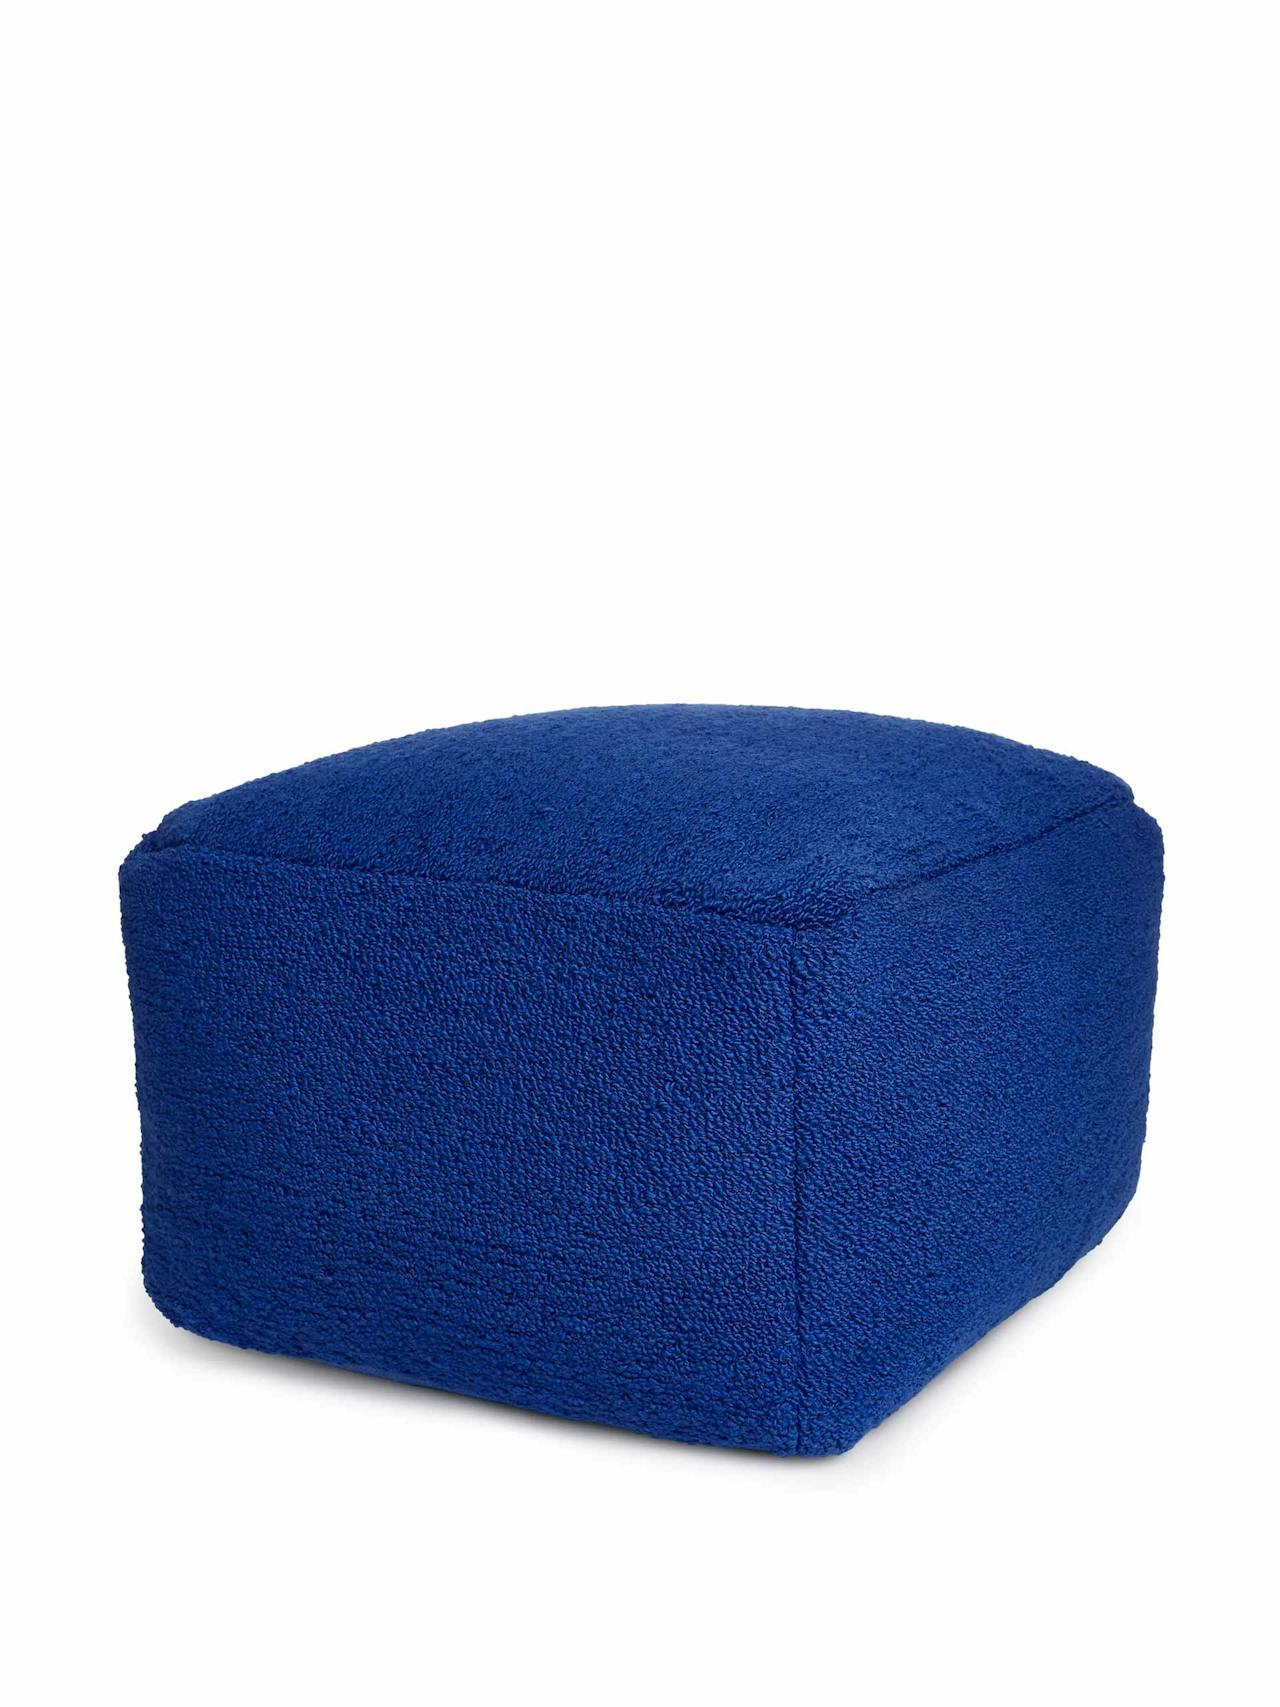 Blue cotton-wool pouffe